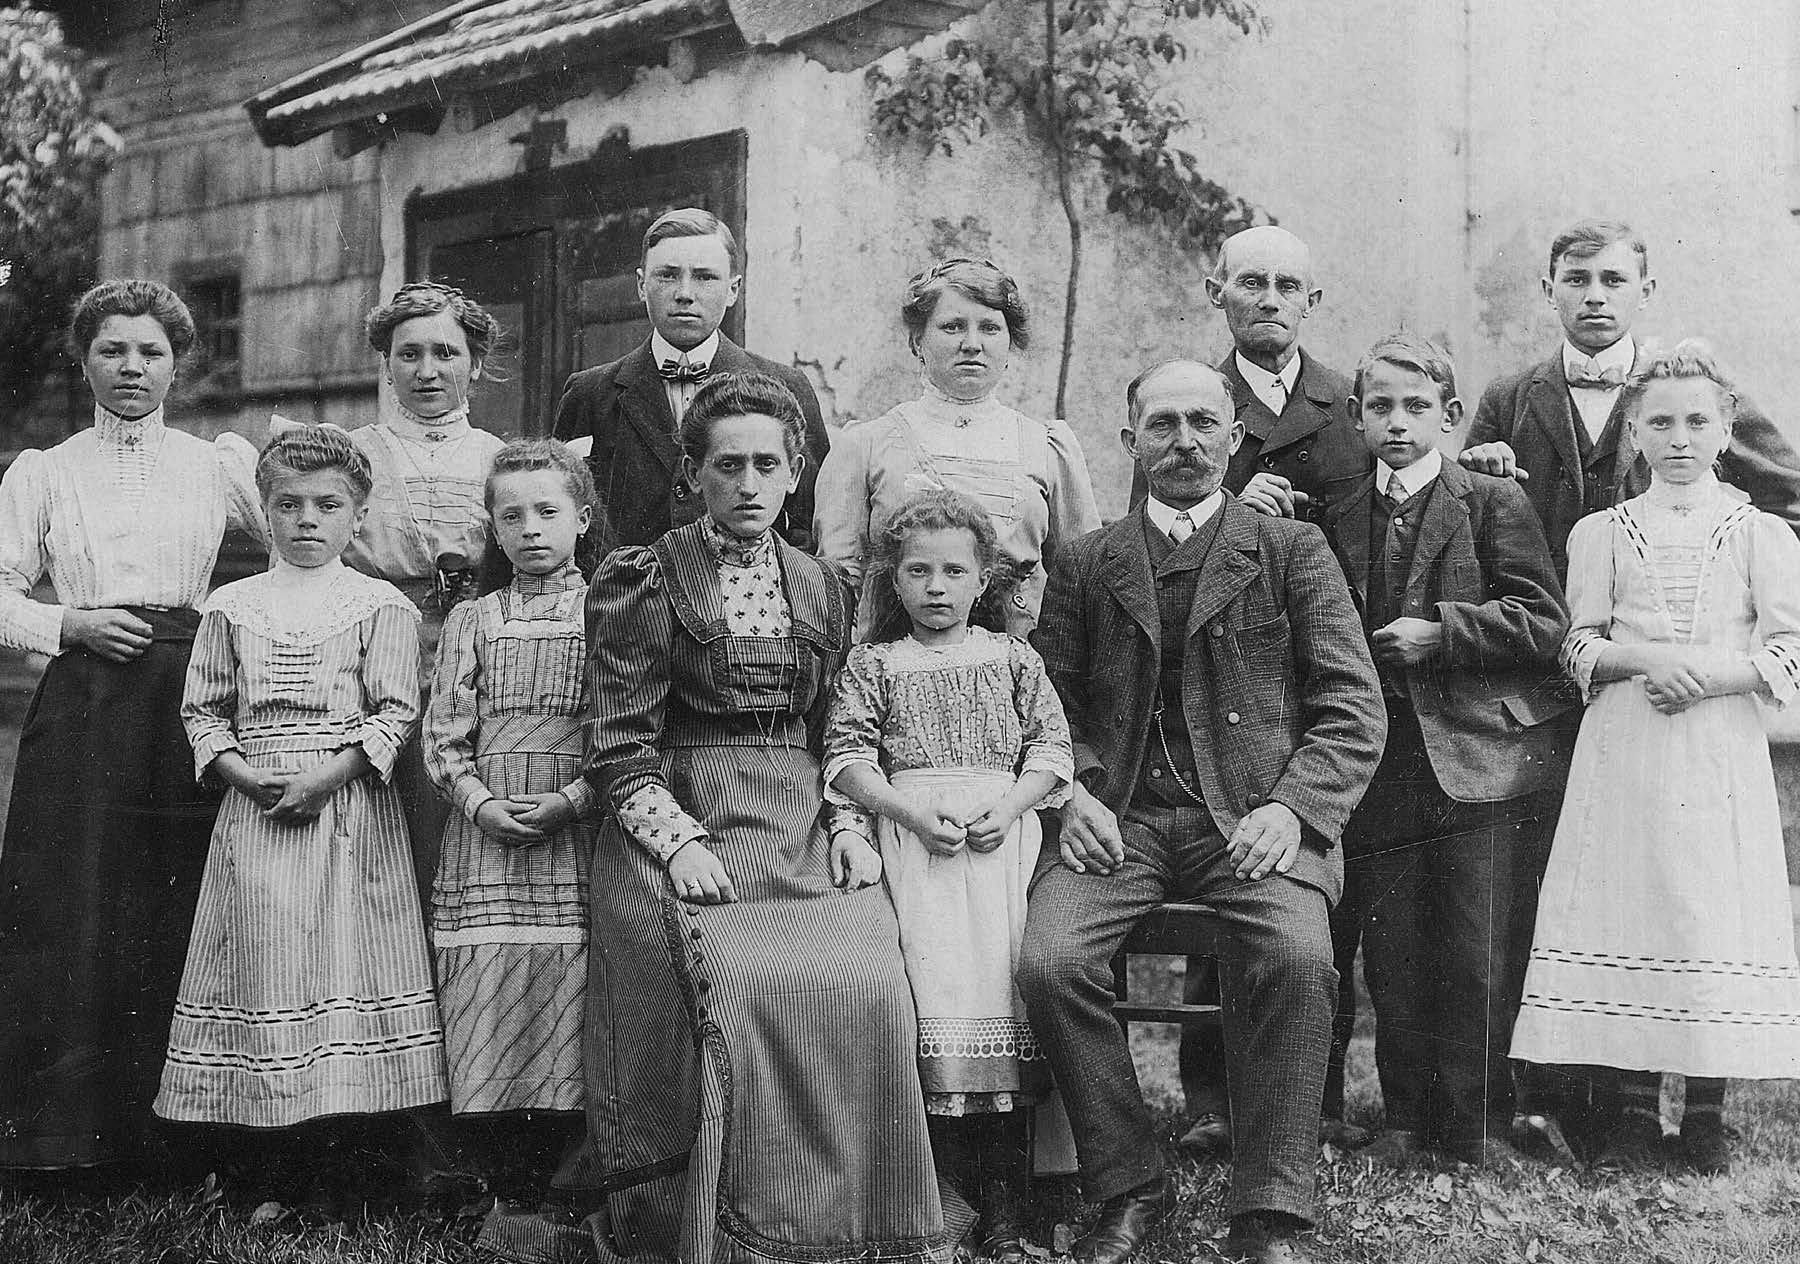 Johann and Bertha Huber and family